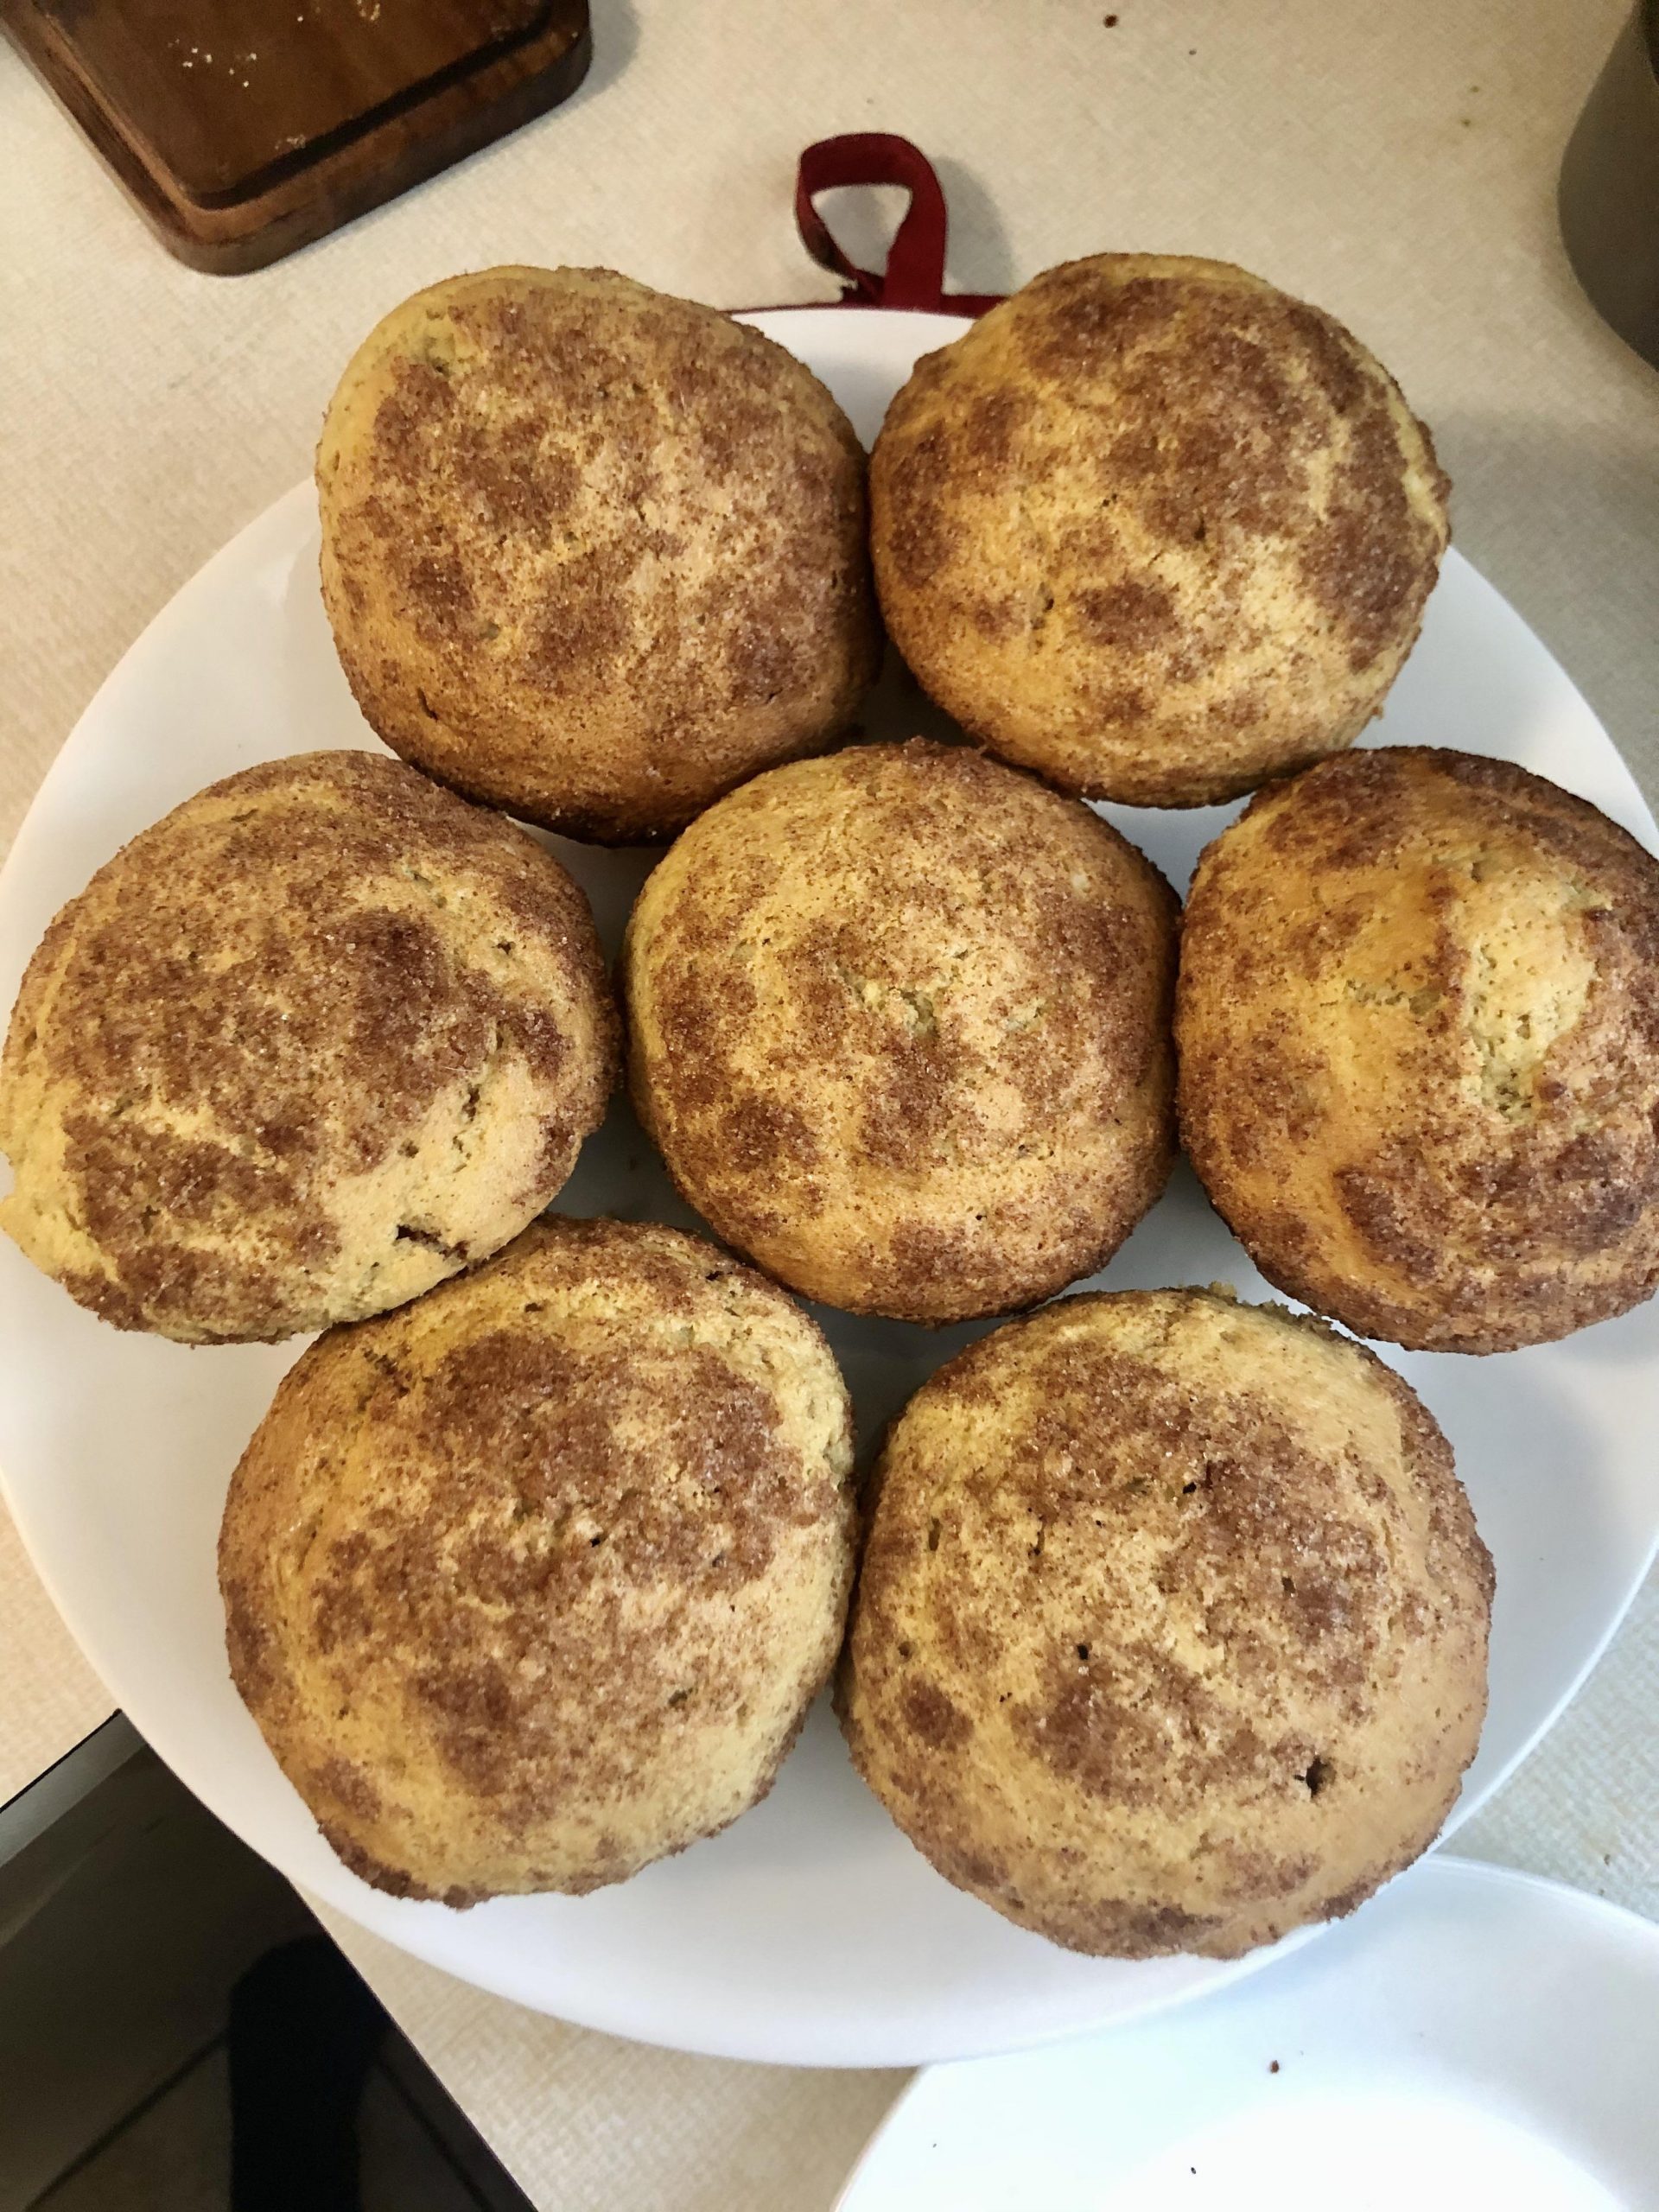 I made Krusteaz gluten free coffee cake muffins! So yummy ...